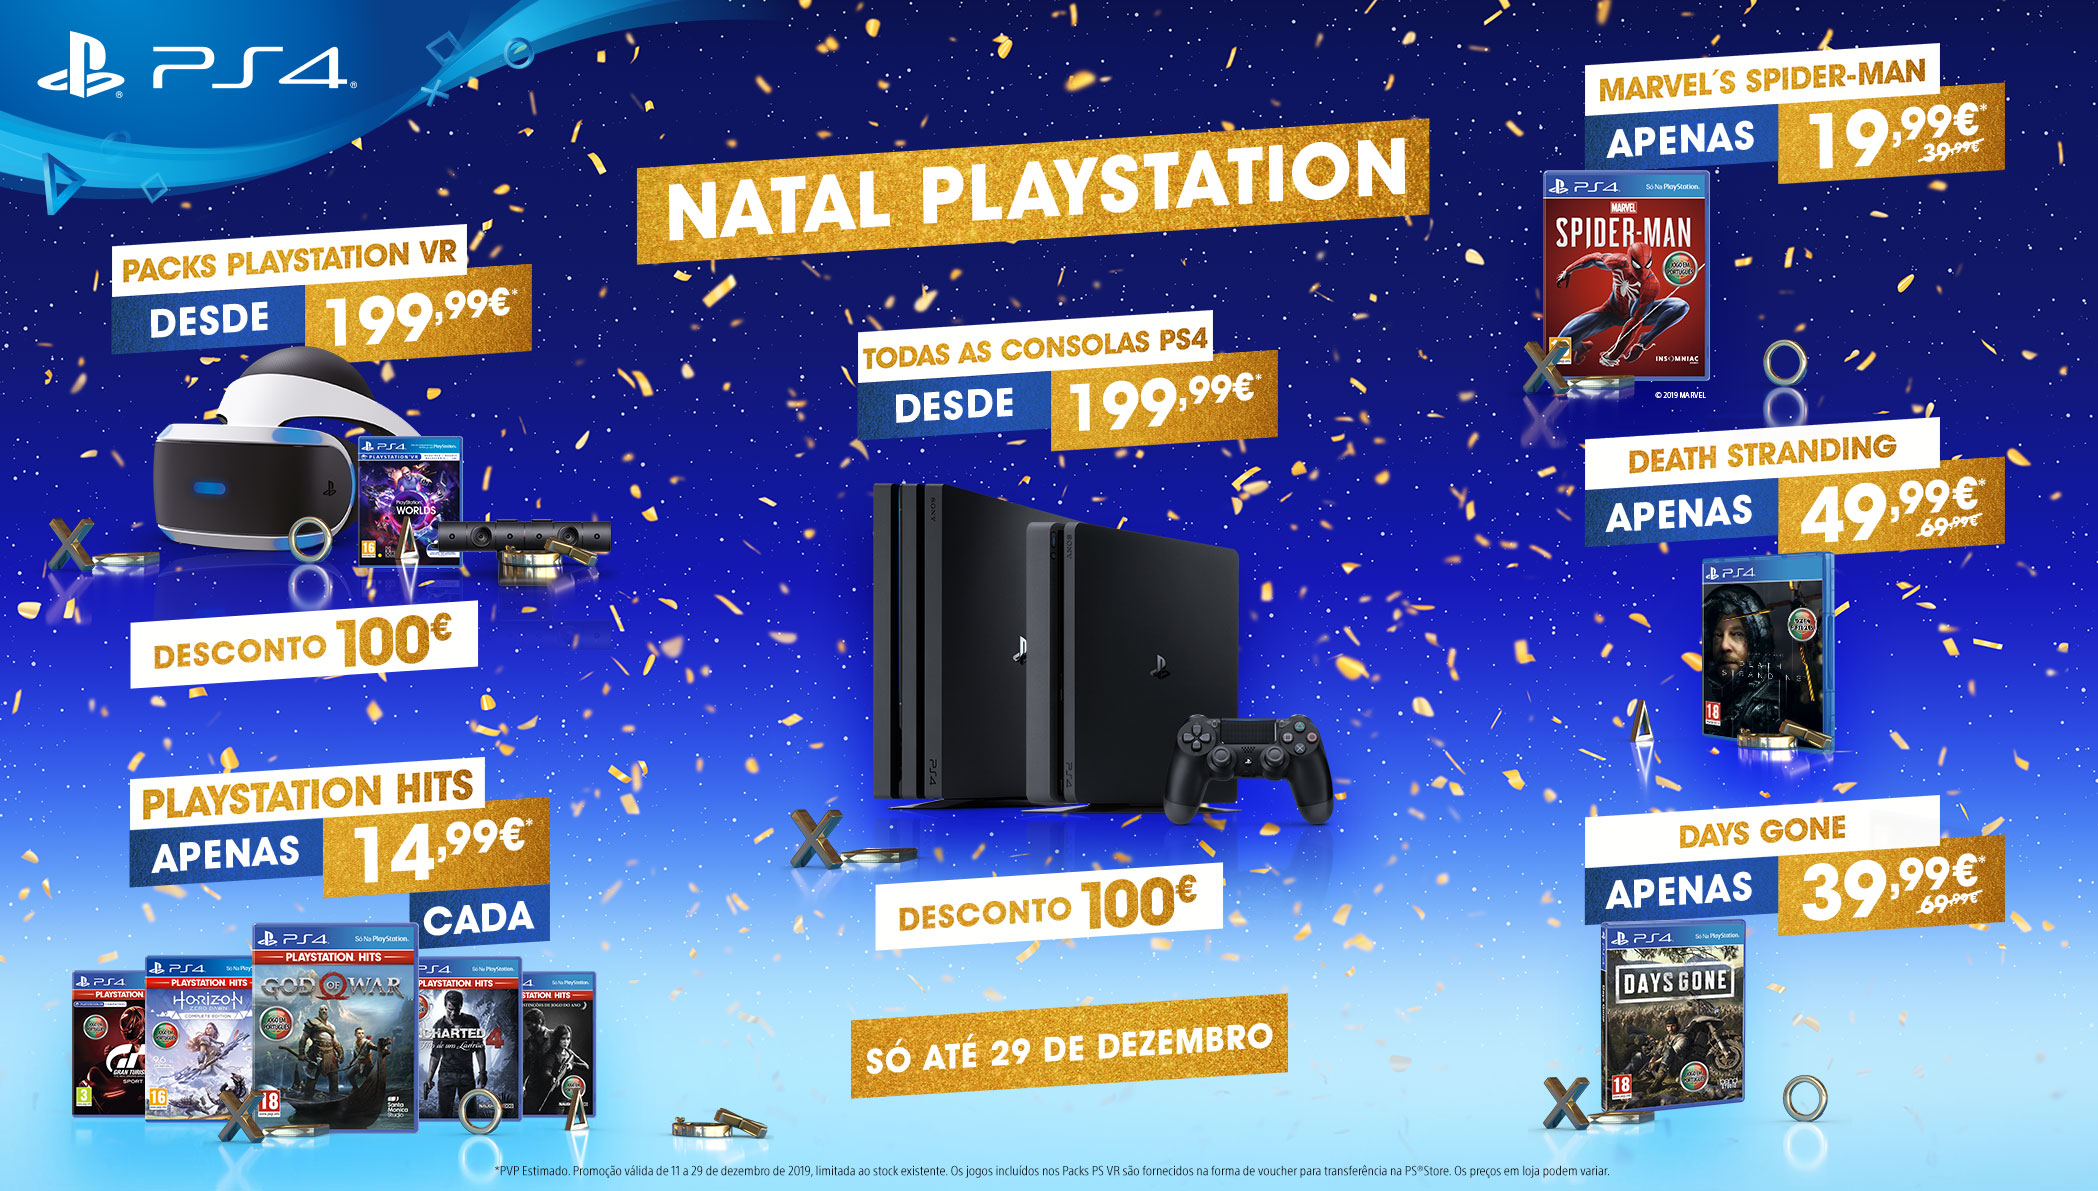 Natal-PlayStation-2019.jpg